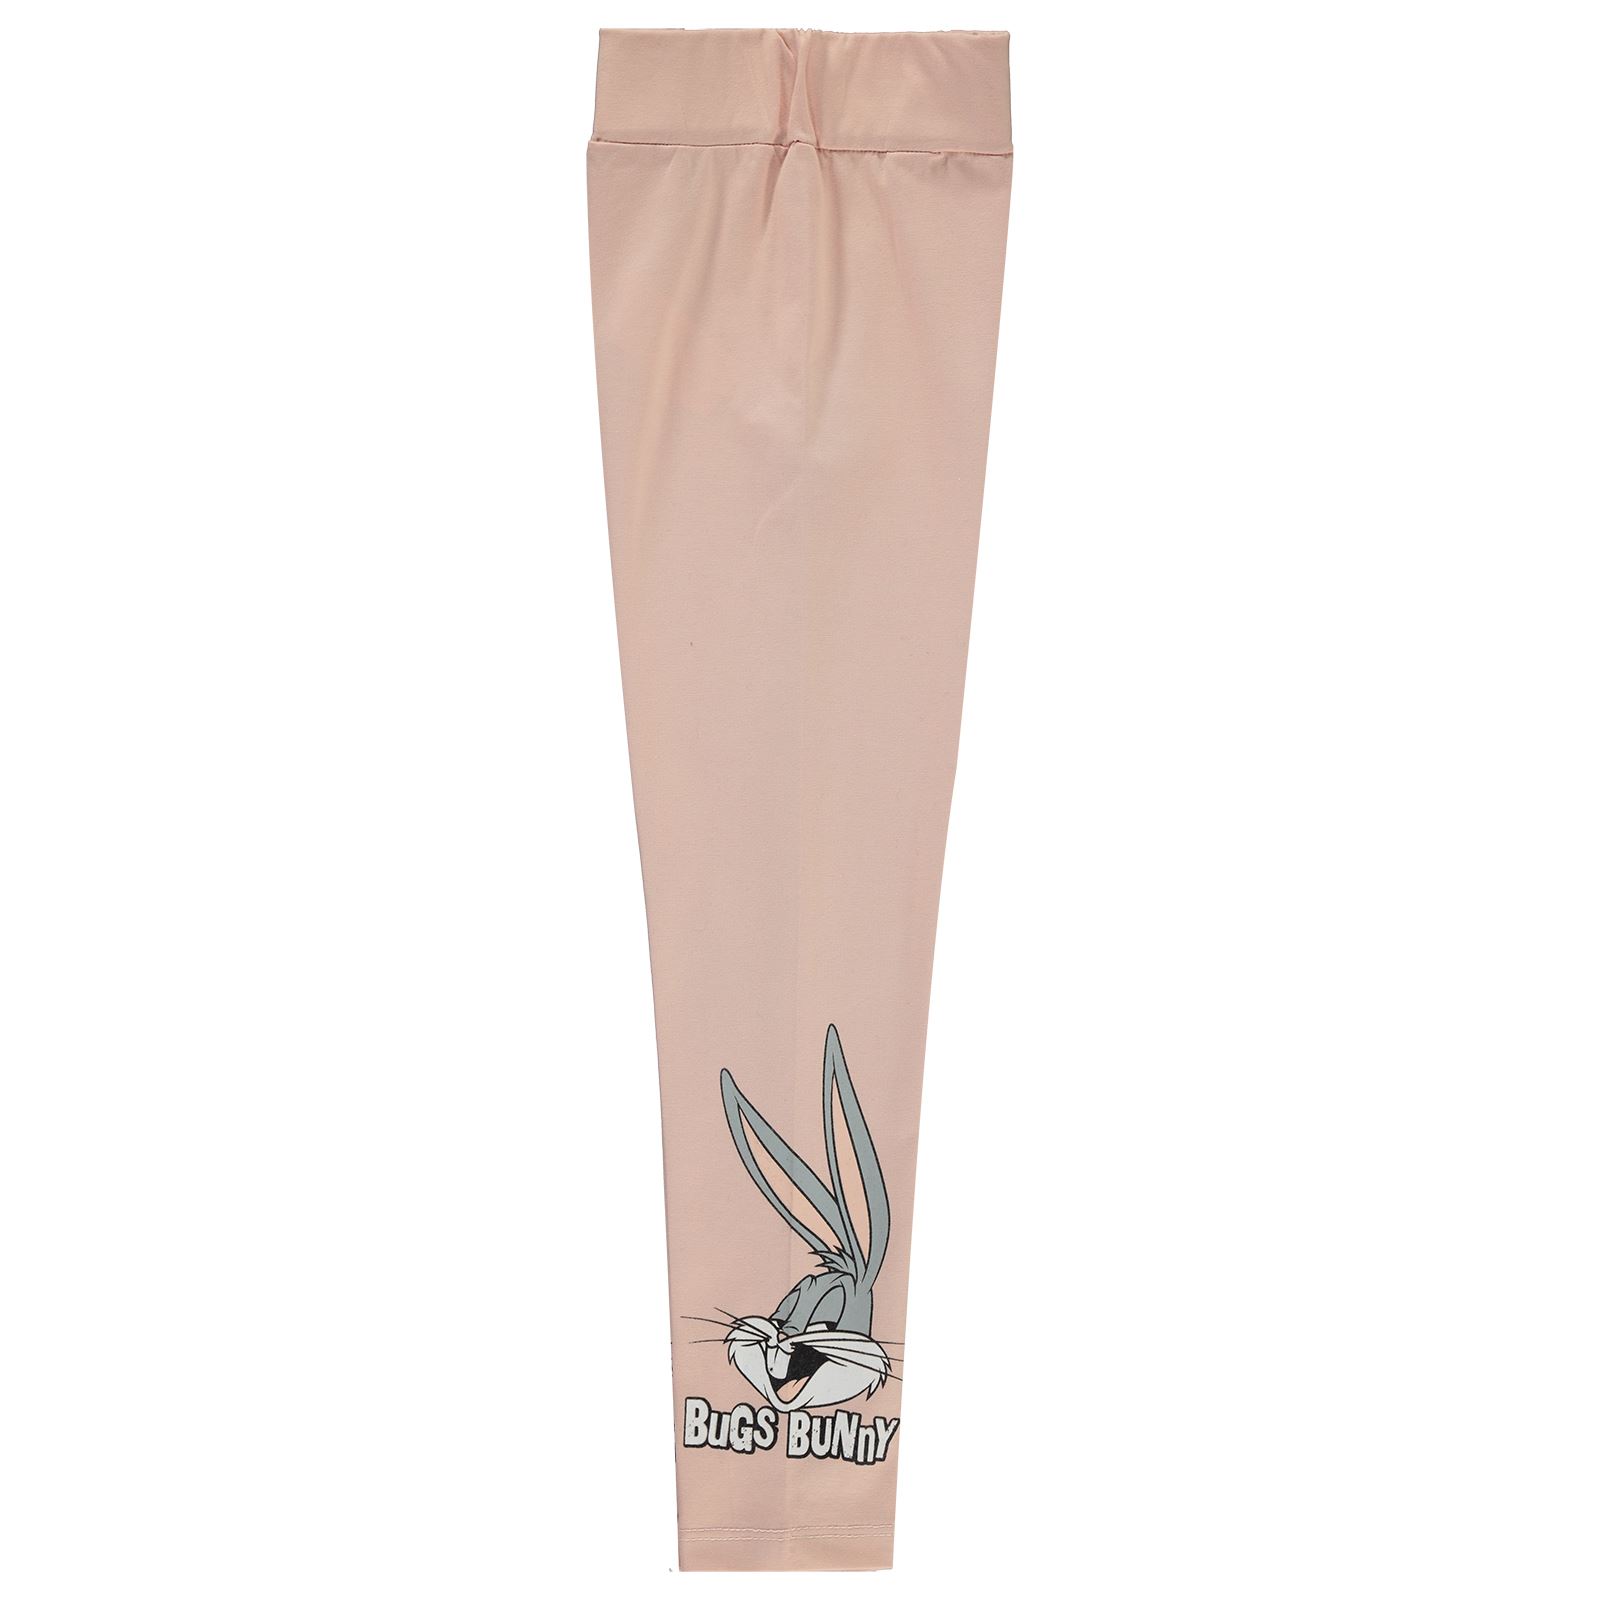 Bugs Bunny Kız Çocuk Uzun Tayt 6-9 Yaş Pudra